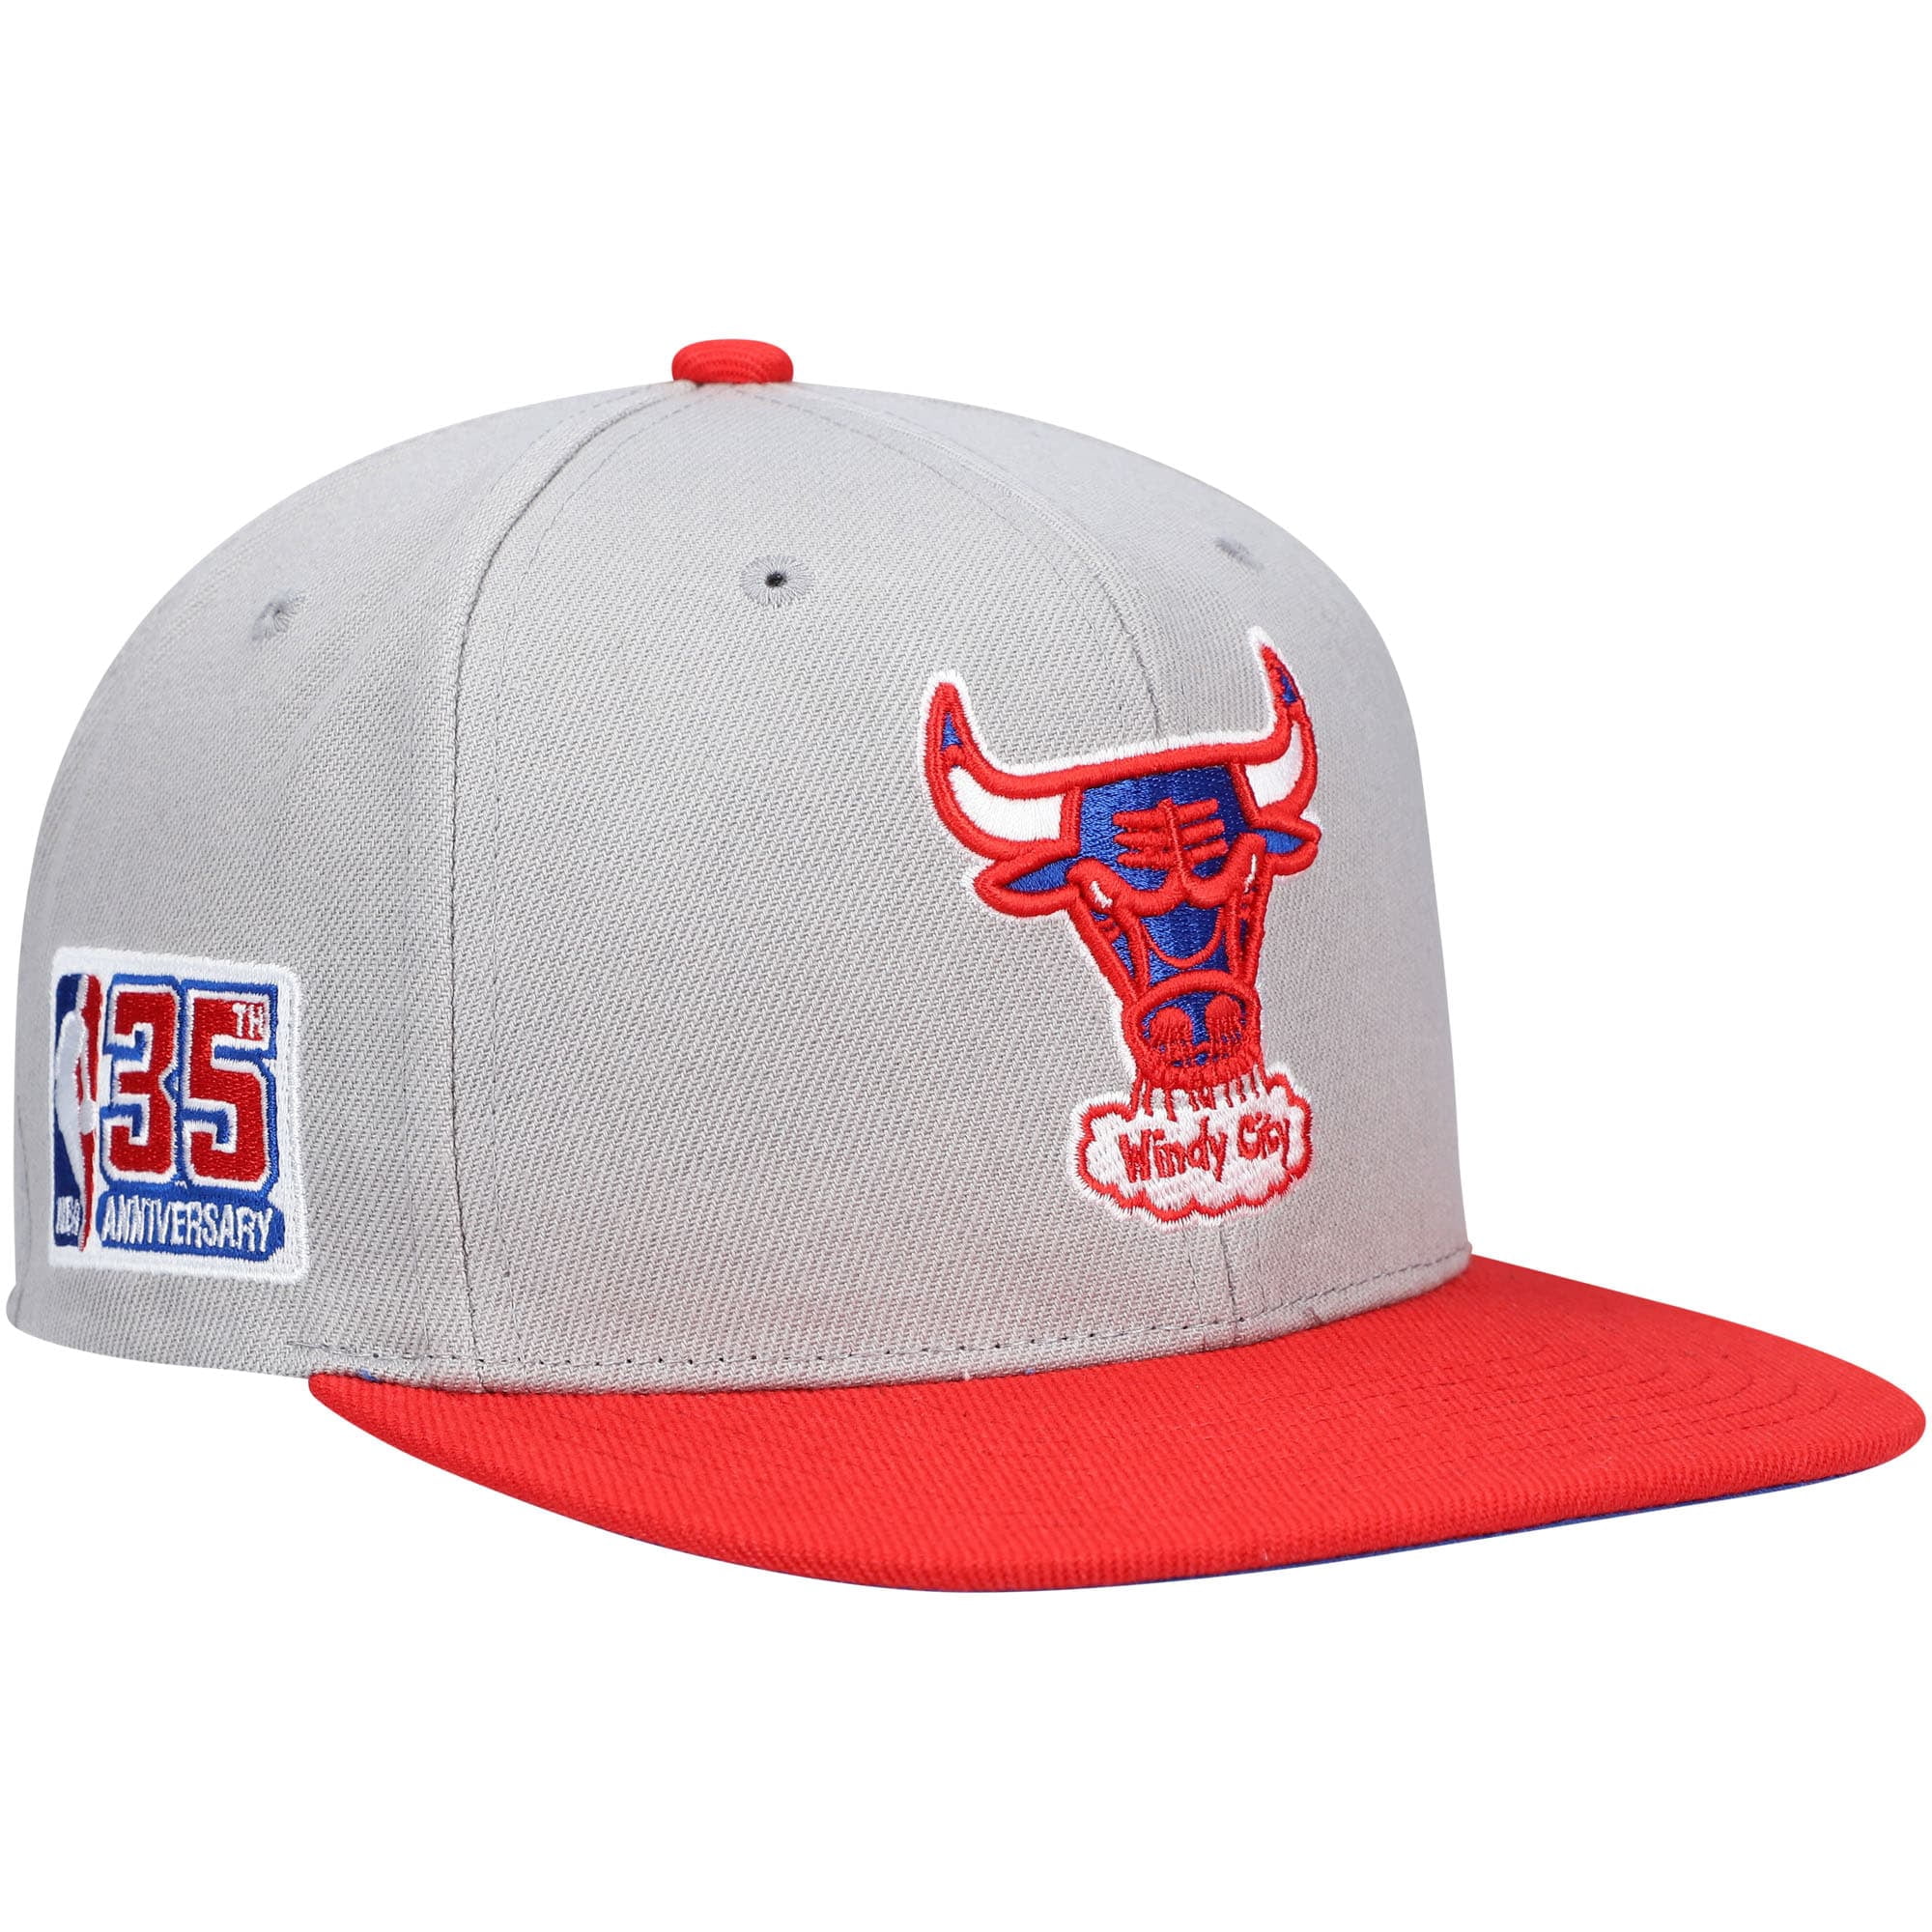 Vintage New Era Chicago Bulls Hardwood ClassicS Cap Hat